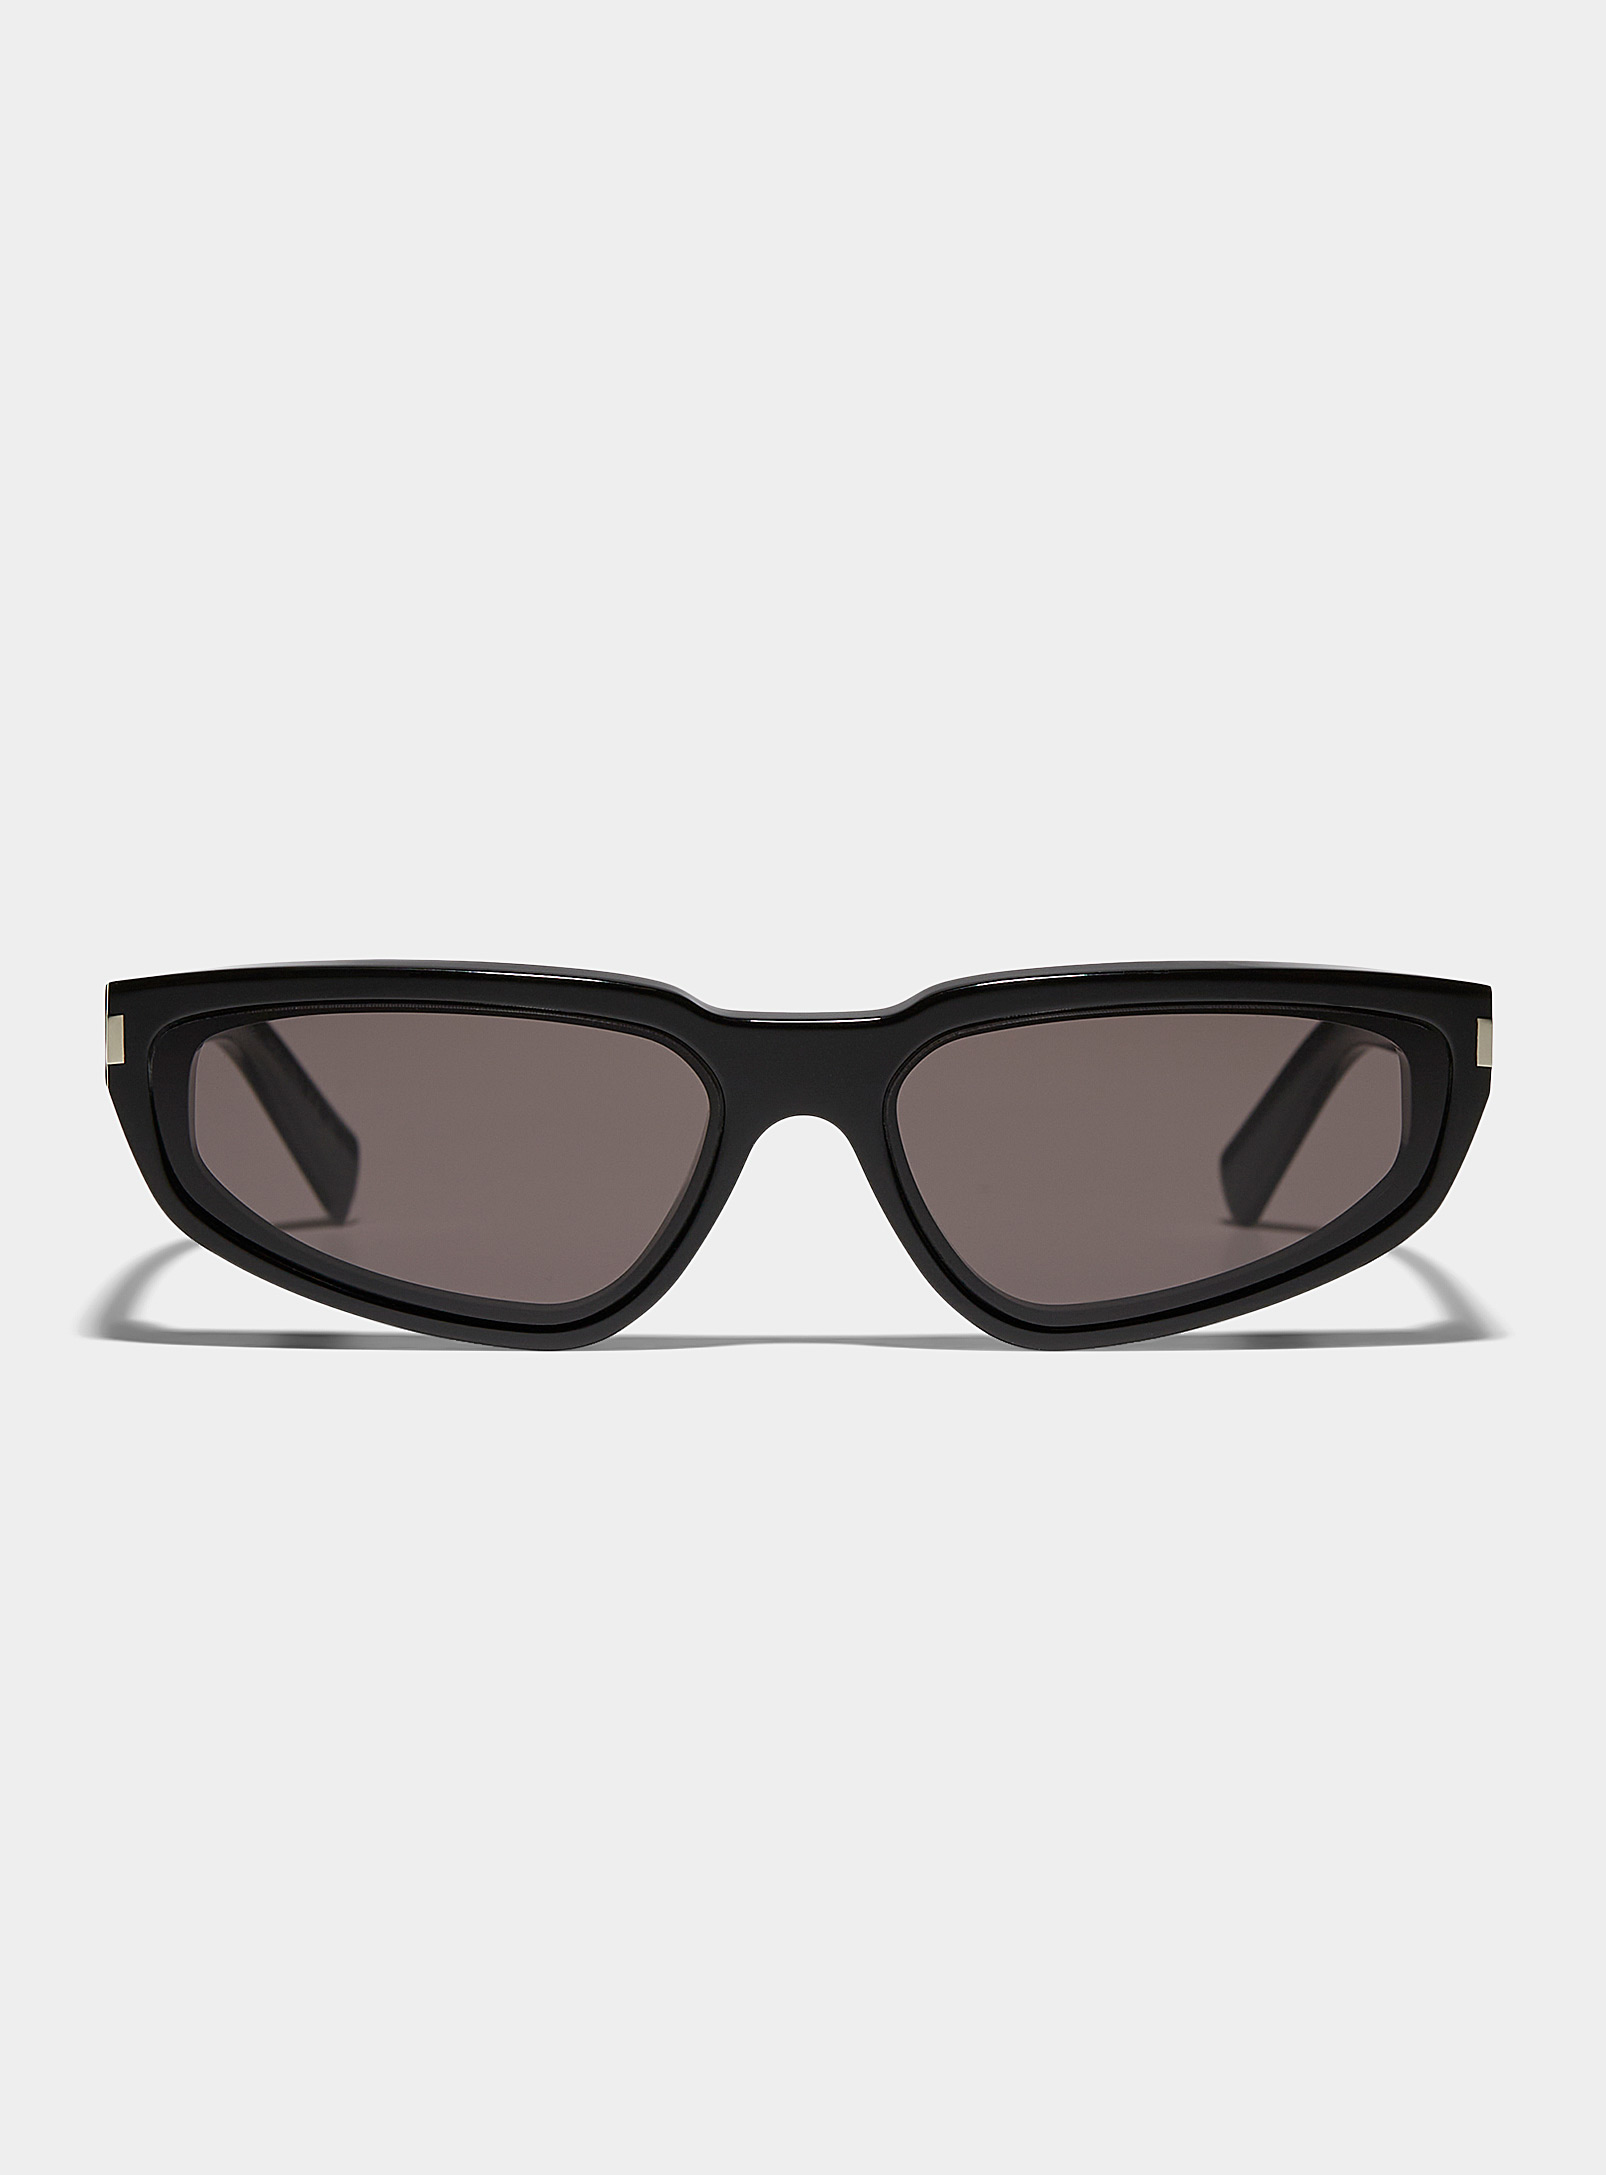 Saint Laurent - Women's Nova angular sunglasses